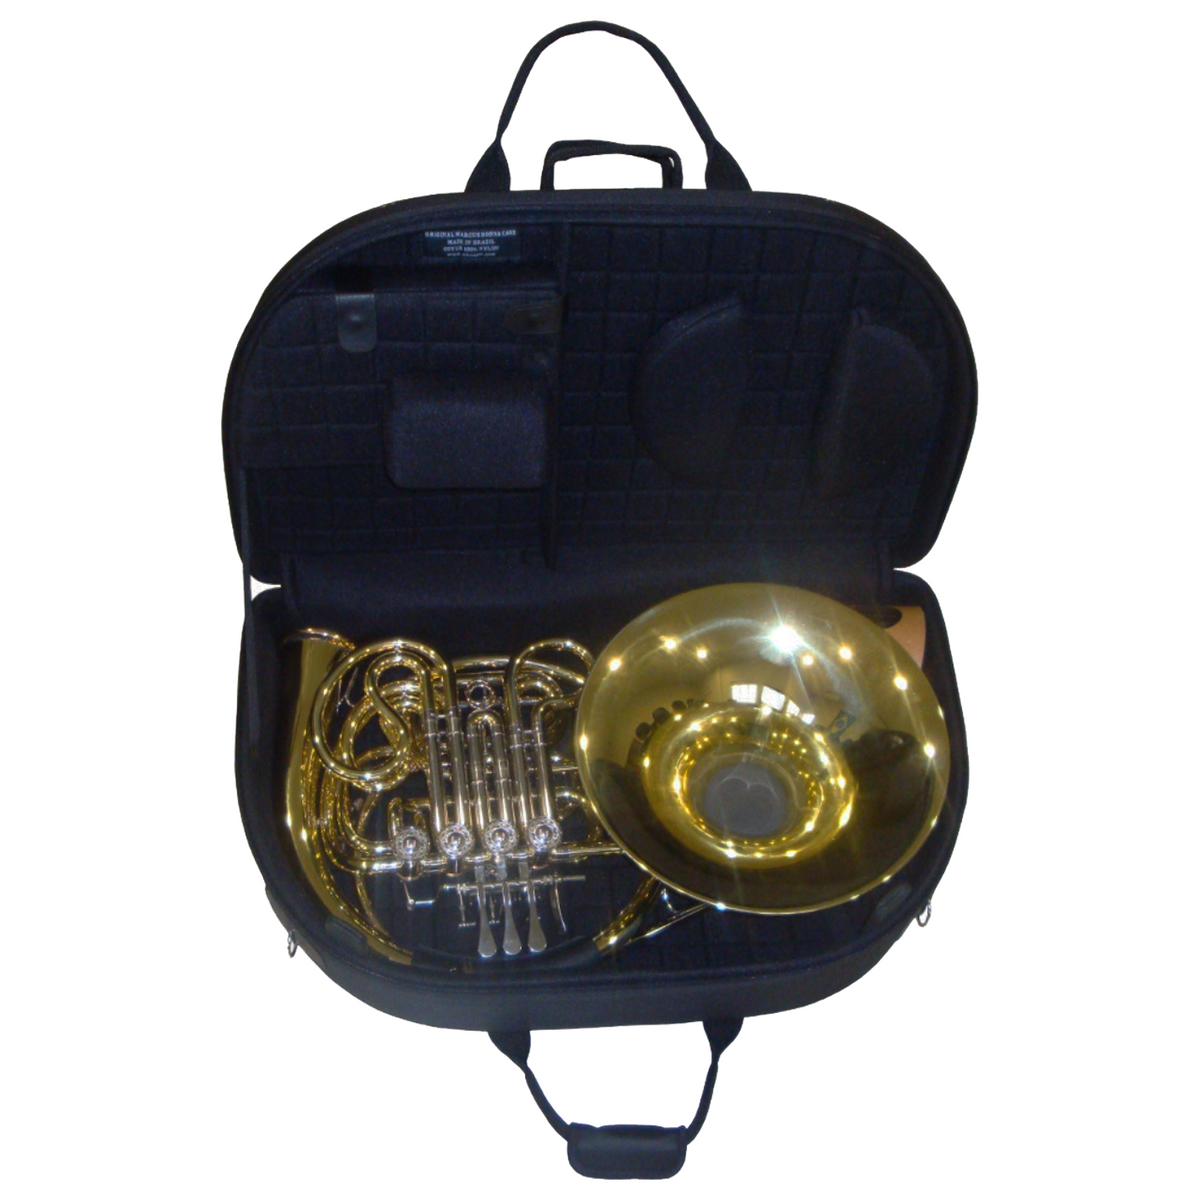 Marcus Bonna - Nylon MB-8 French Horn Case-Case-Marcus Bonna-Music Elements